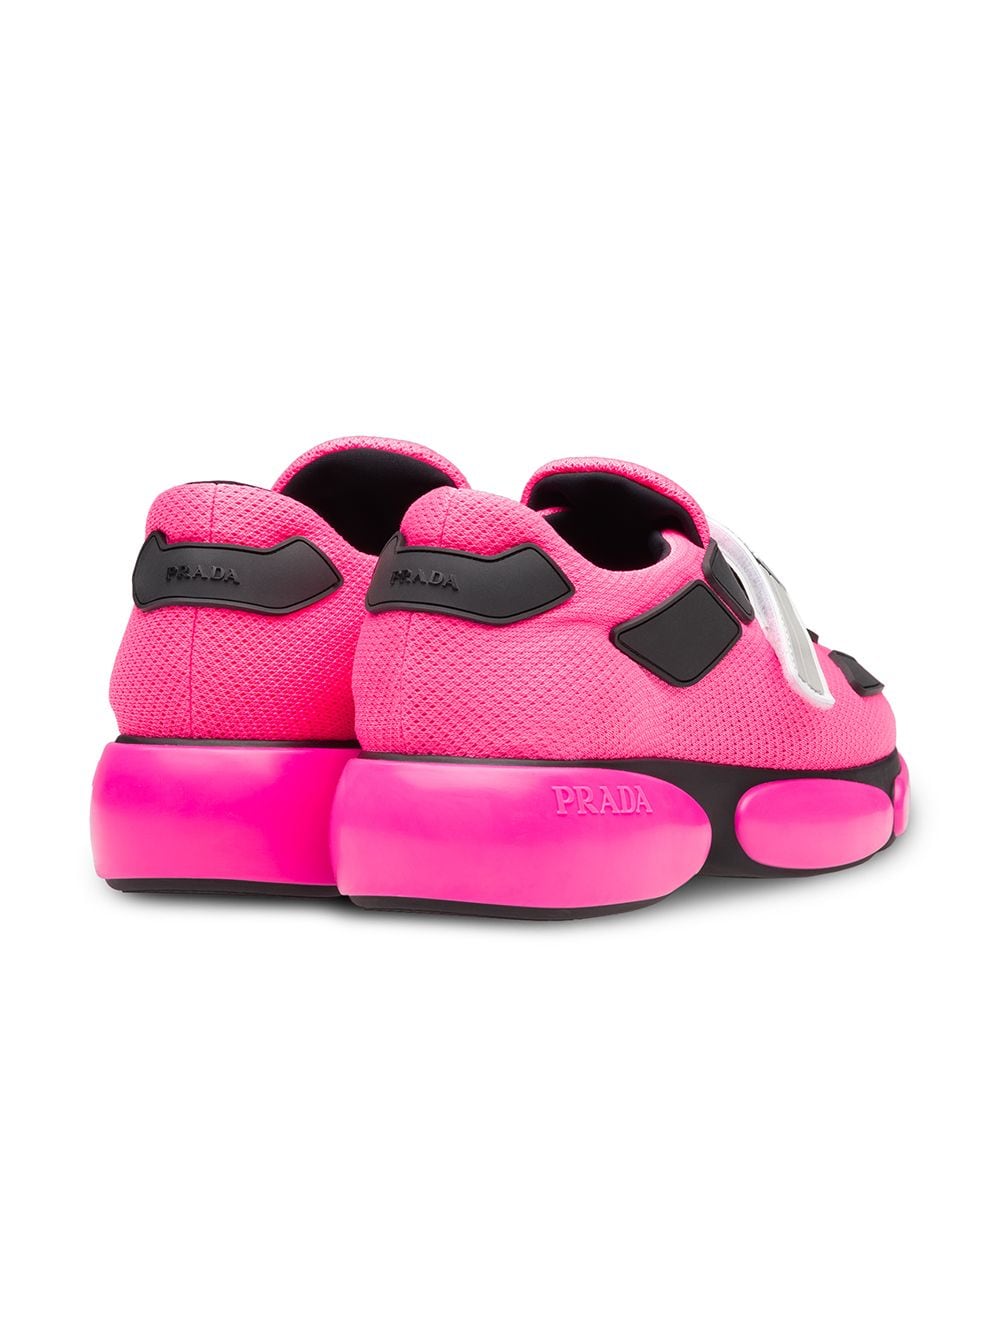 Prada Prada Cloudbust sneakers pink & black 1E293IFDB403KNA - Farfetch